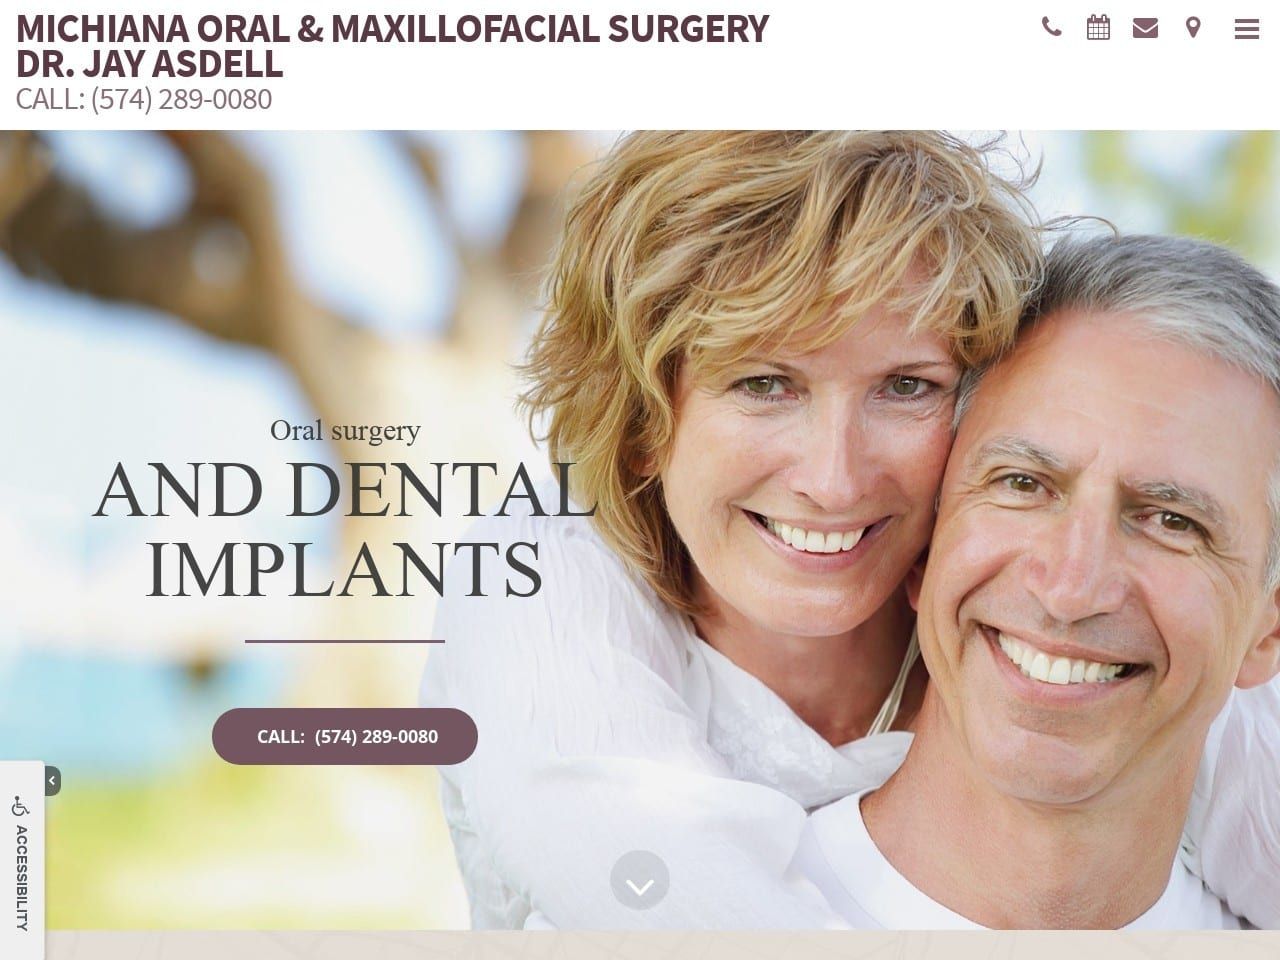 Michiana Oral and Maxillofacial Surgery Inc Website Screenshot from michianaomfs.com